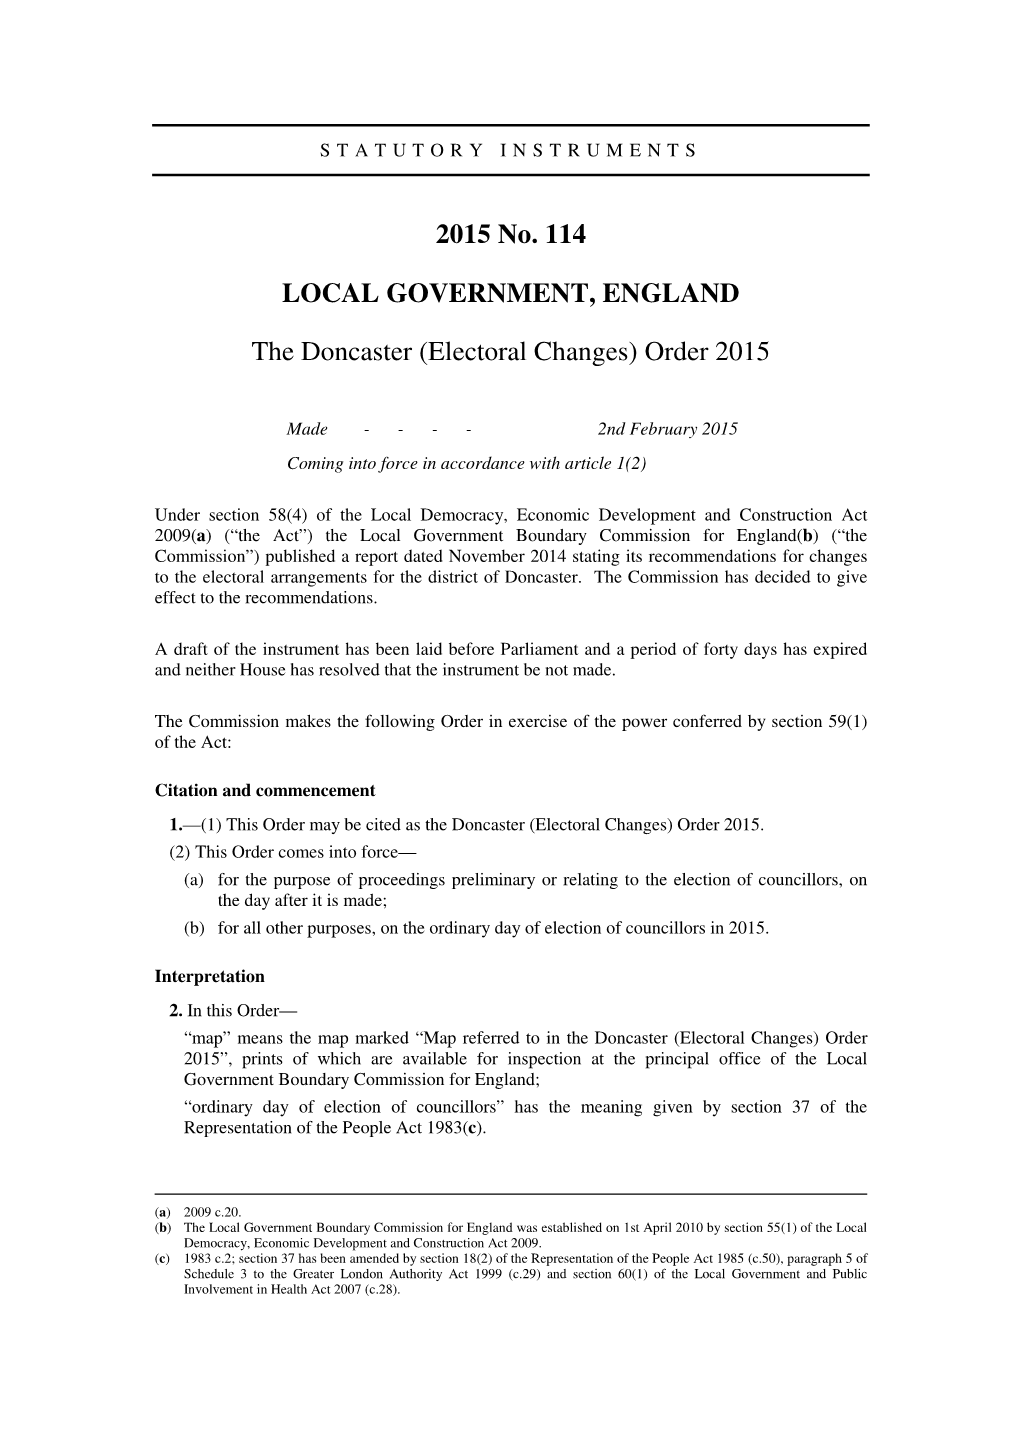 The Doncaster (Electoral Changes) Order 2015